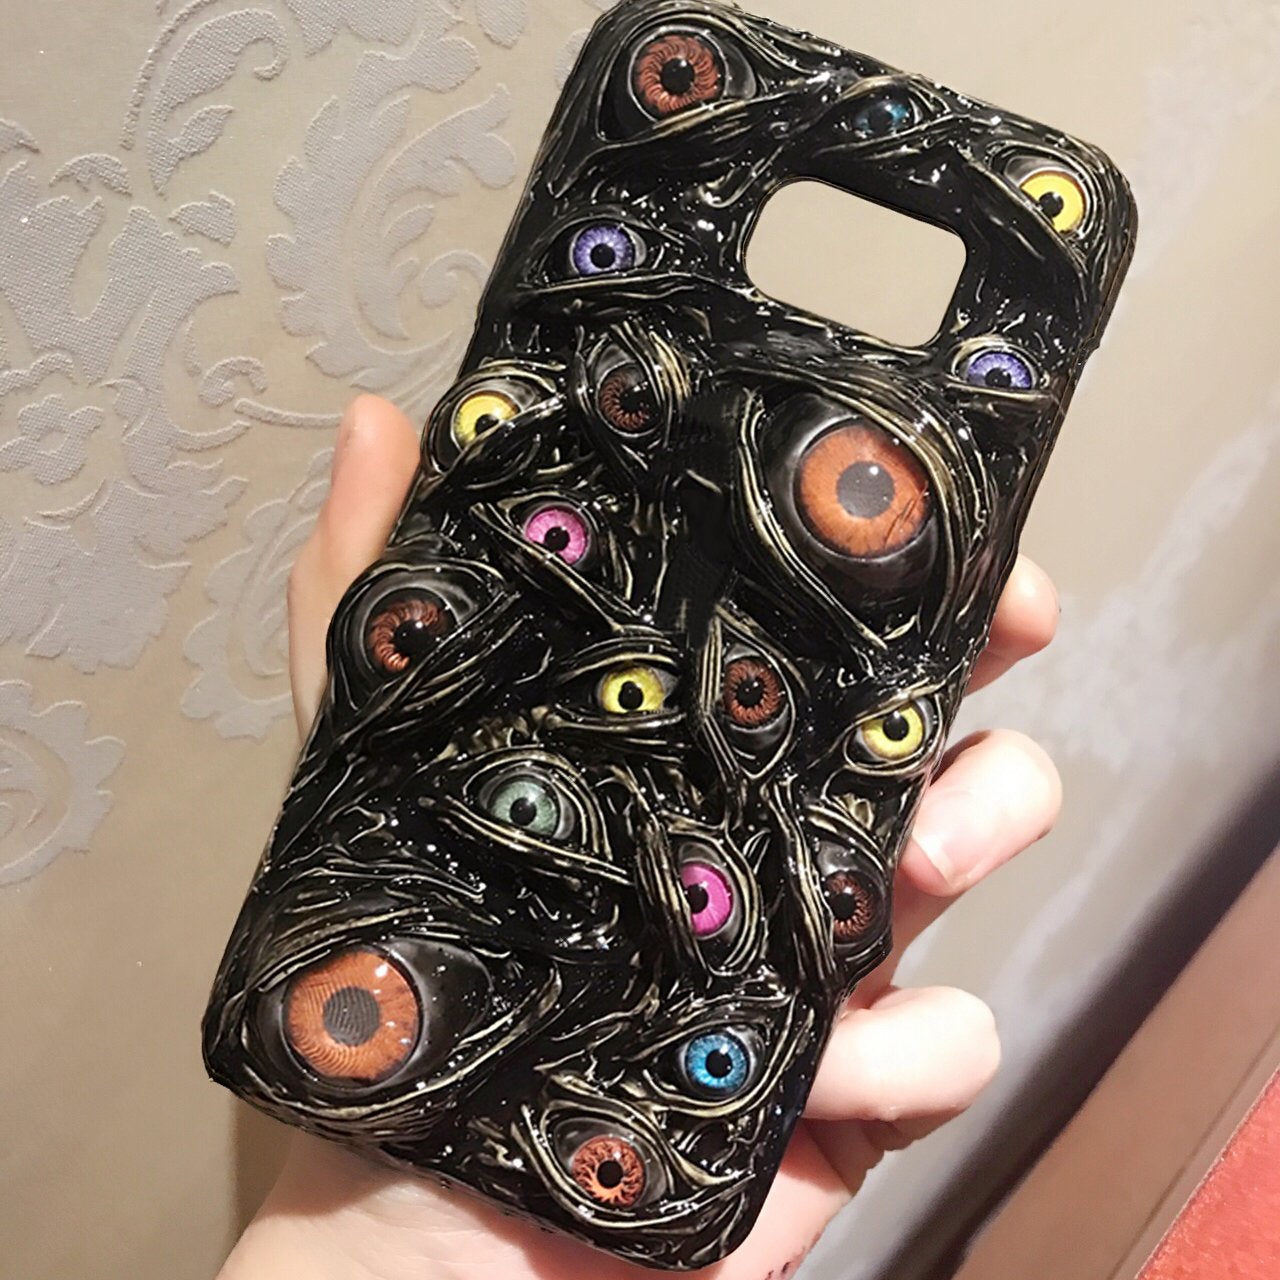 Creepy Pastel Goth Samsung Phone Case in Hand